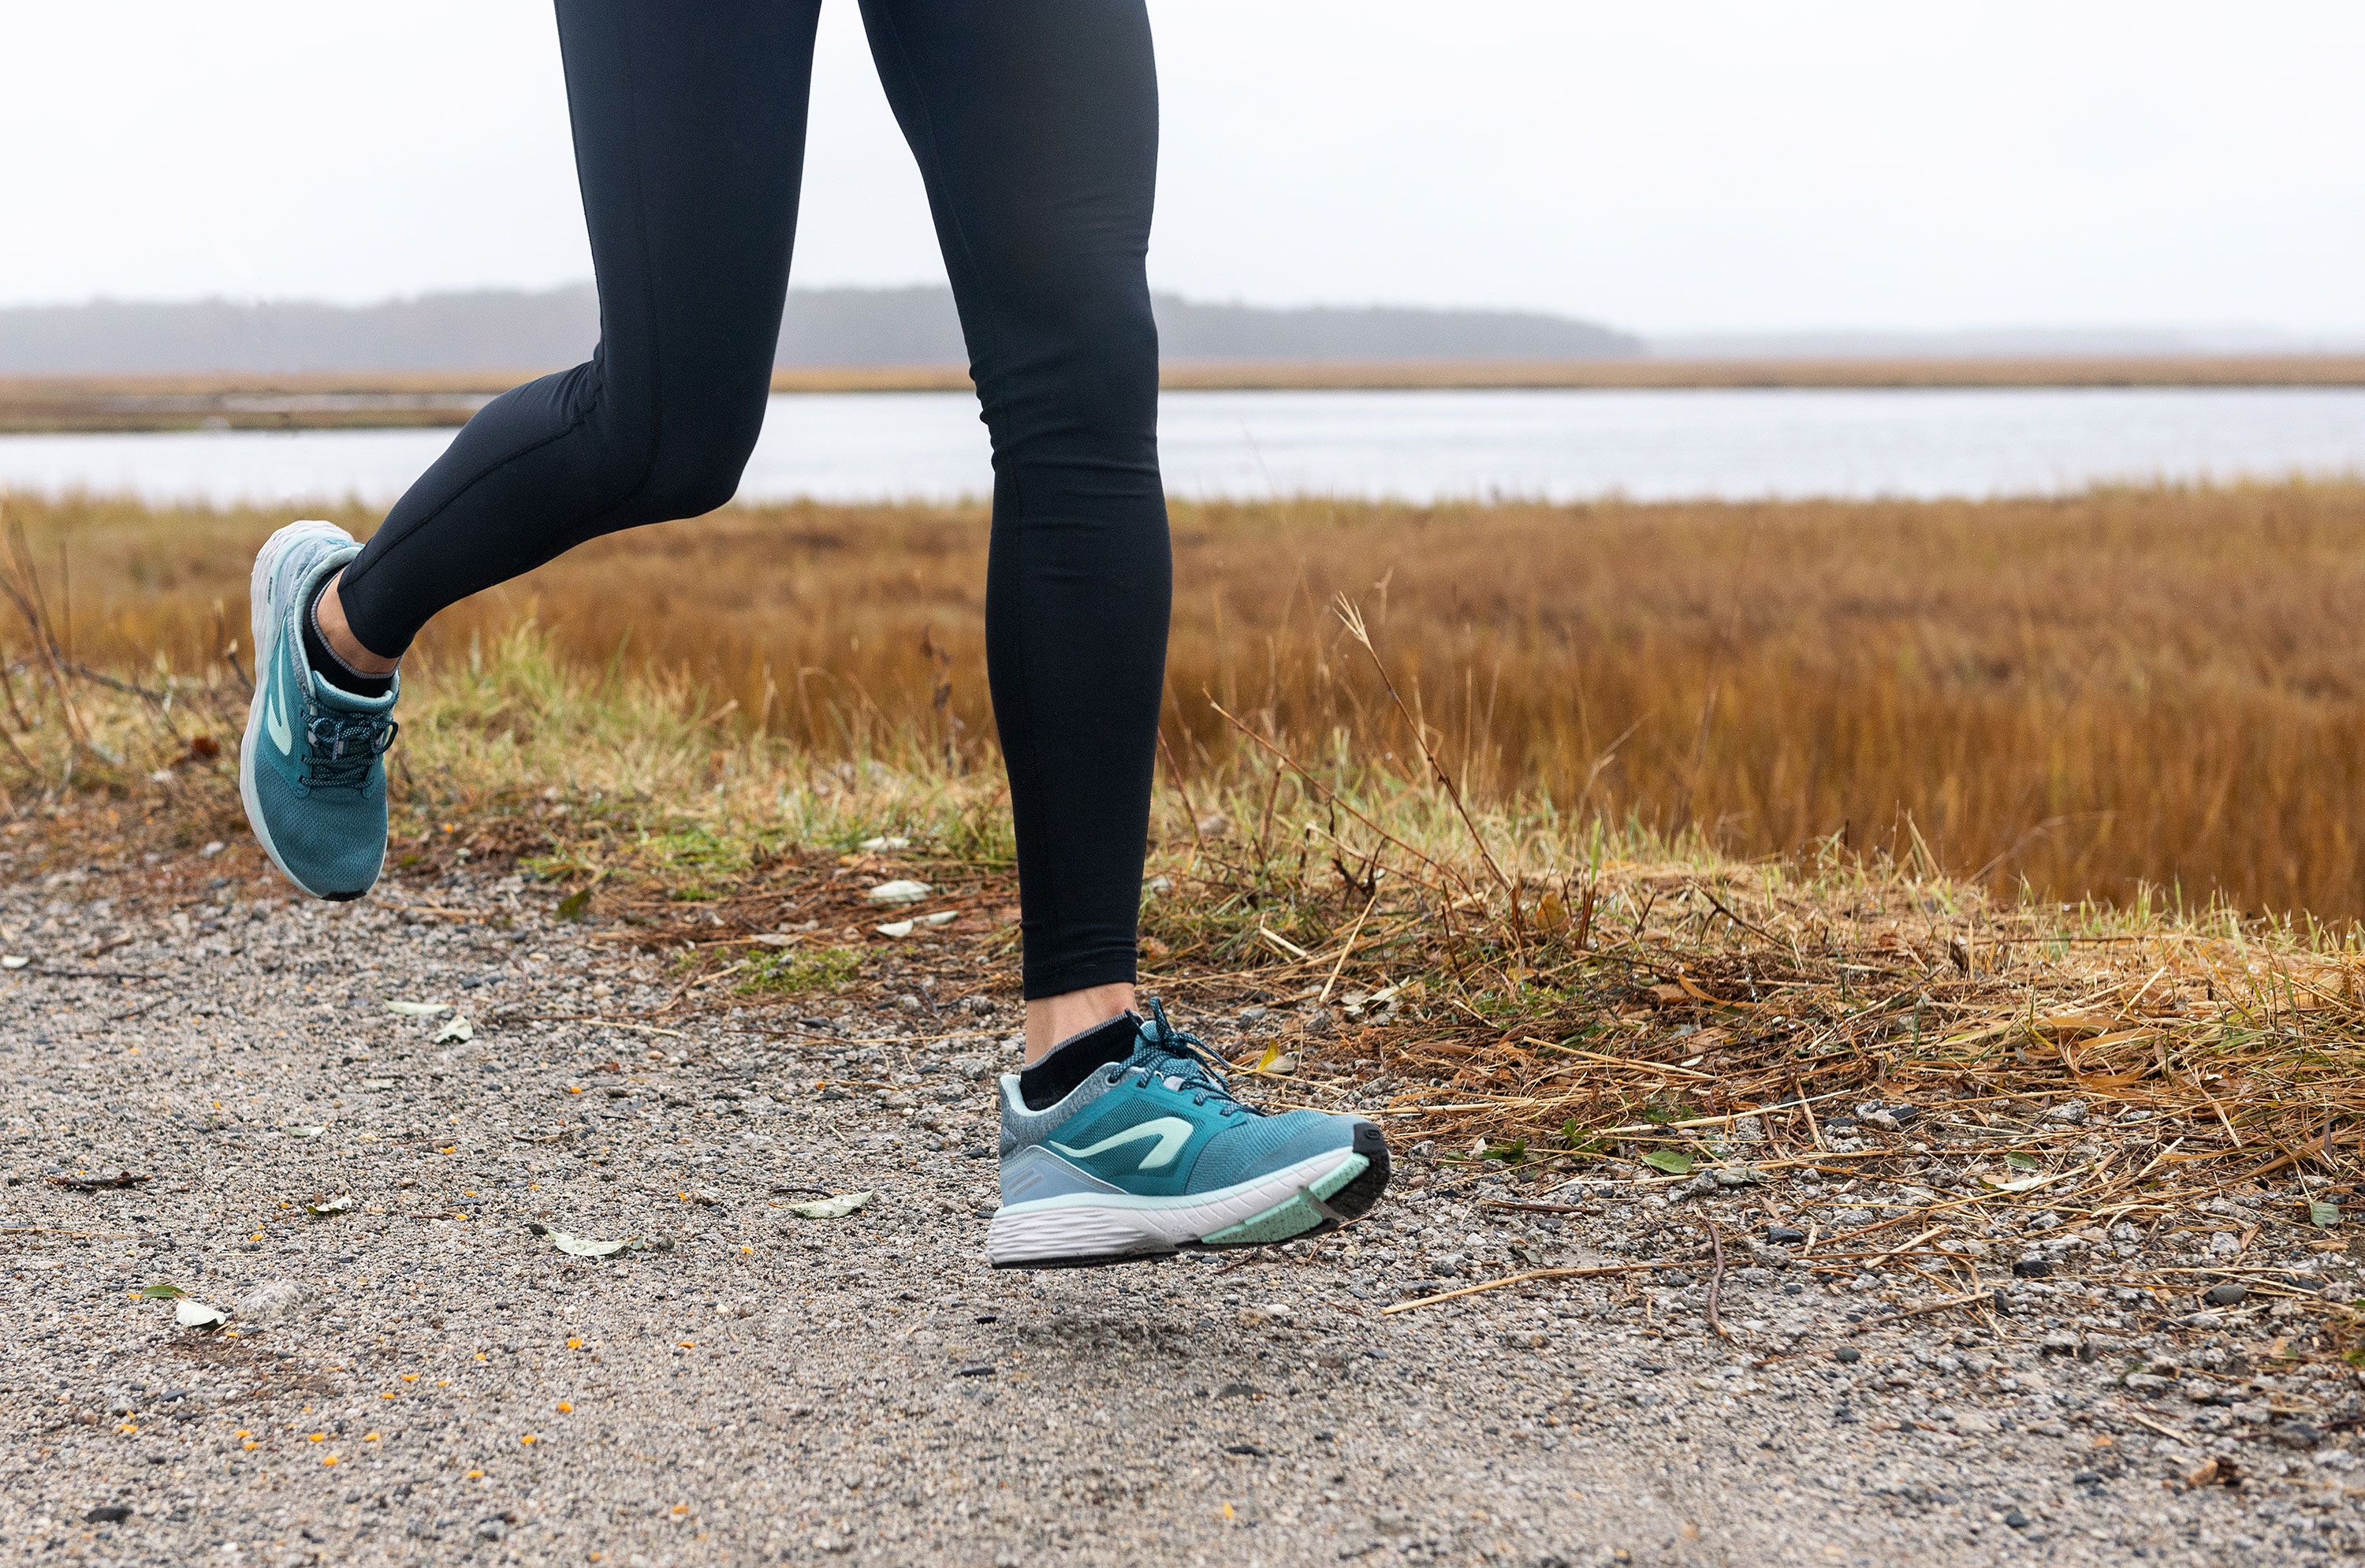 Buy Men's Running Shoes Run Support Breathe - Blue Online | Decathlon